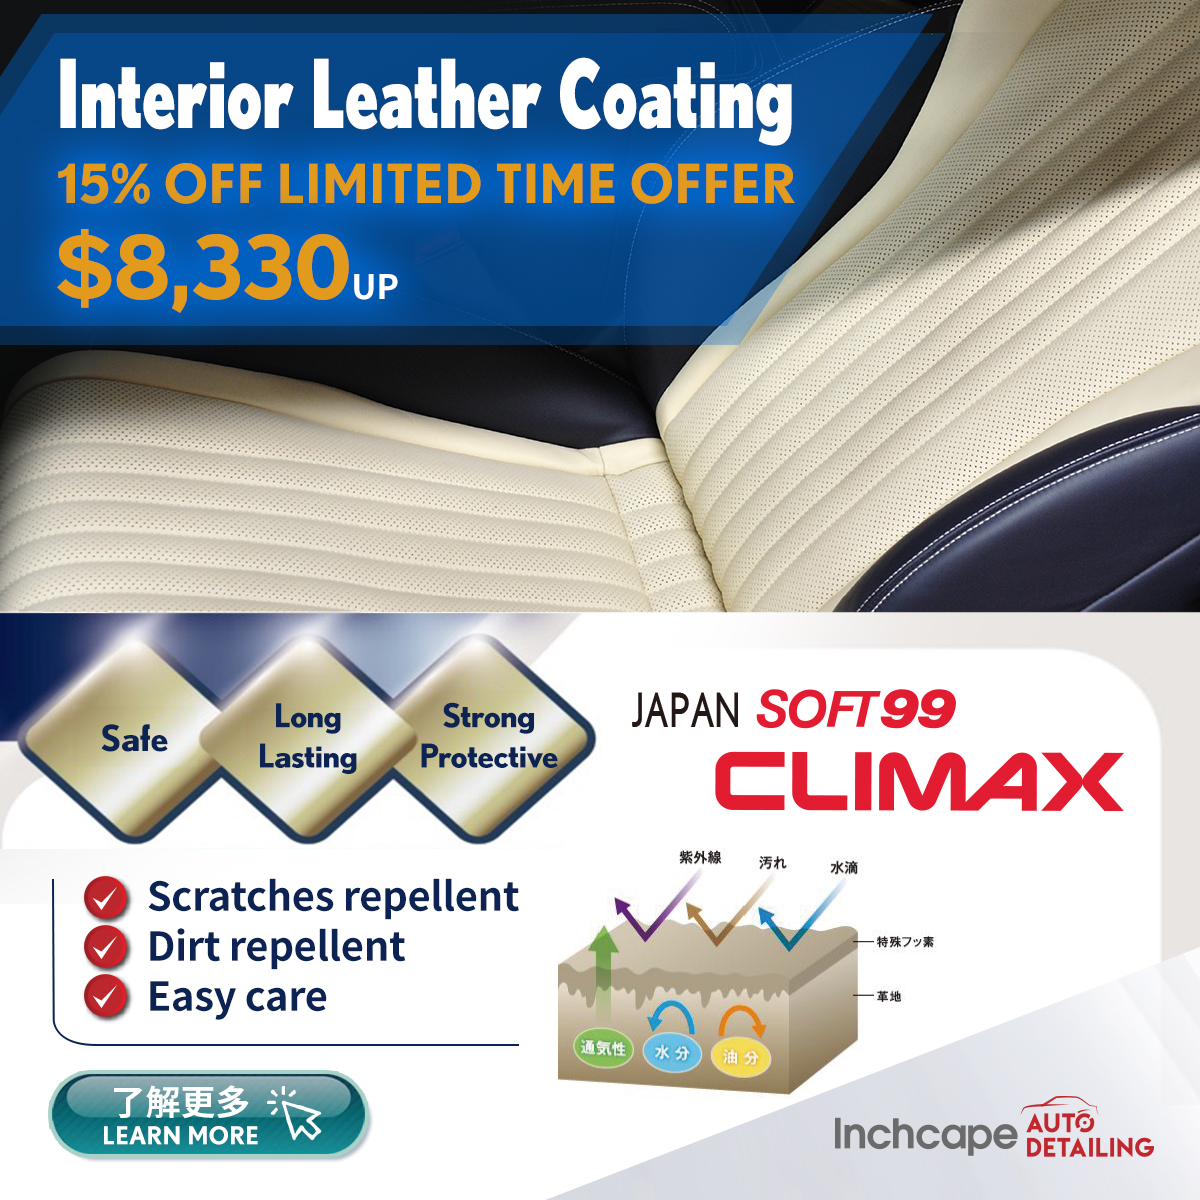 Interior Leather Coating